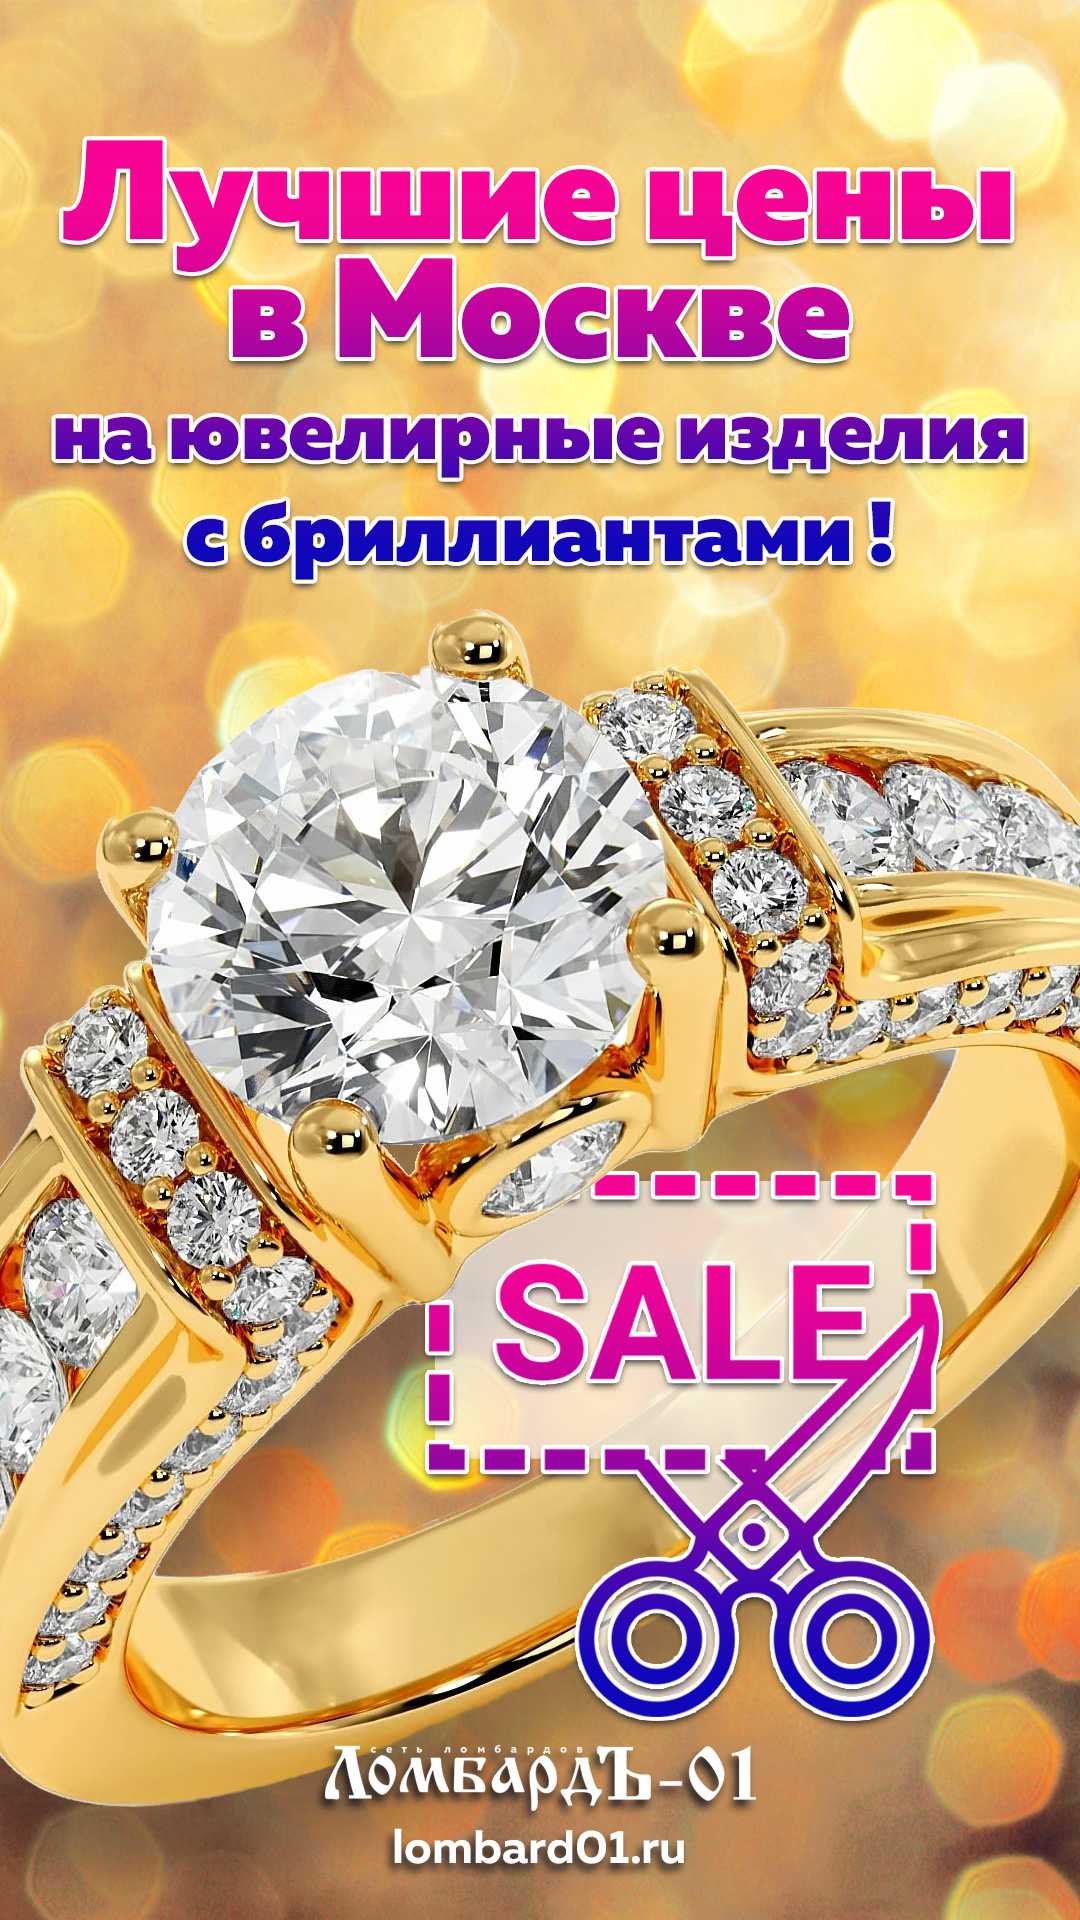 Самая низкая цена на бриллианты, за карат, в Москве. Бриллианты дешево. 